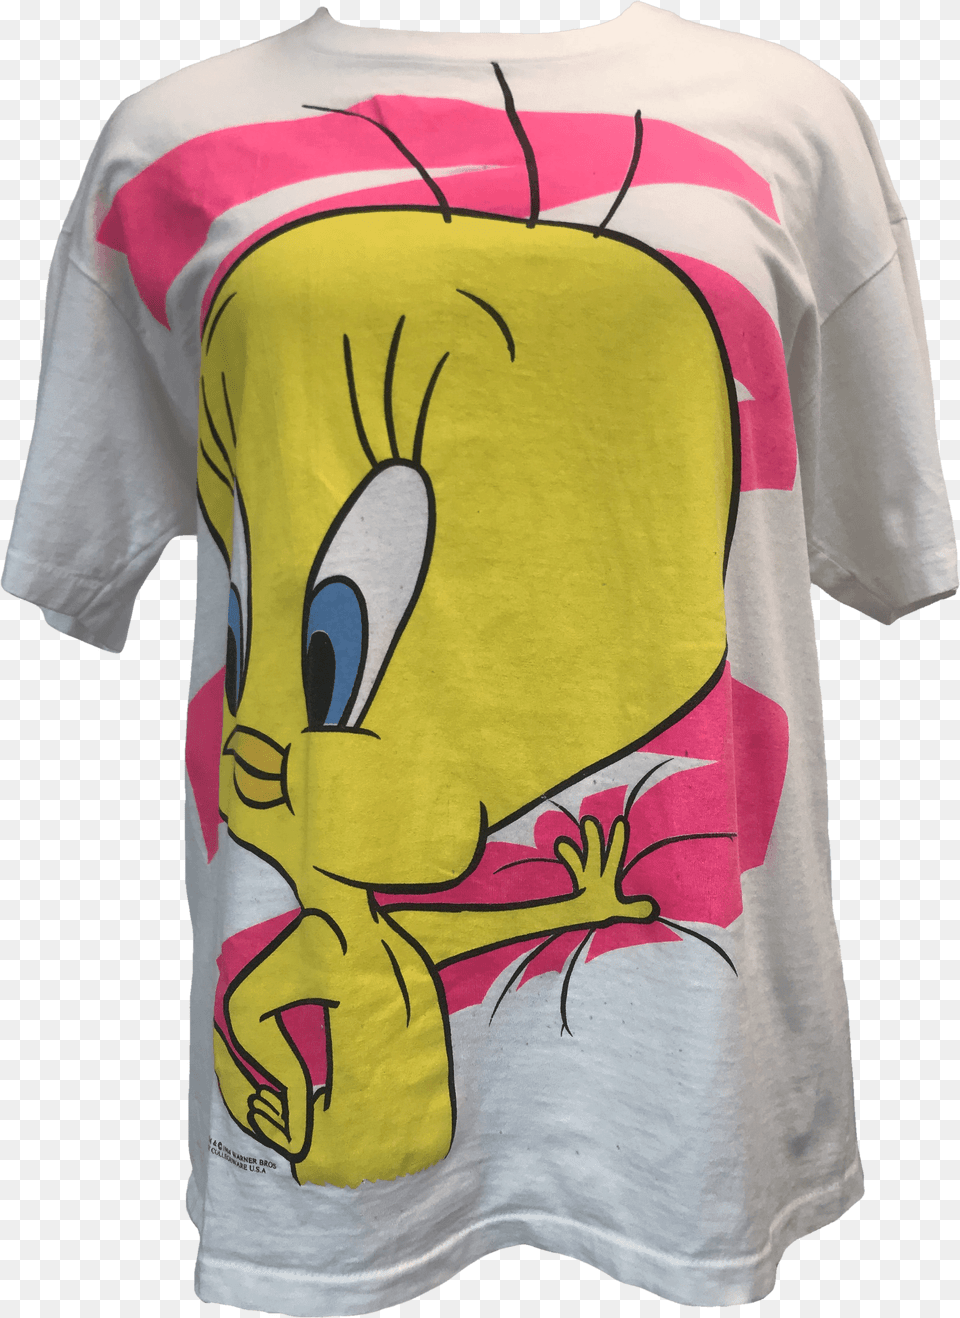 S Tweety Bird T Shirt Active Shirt, Clothing, T-shirt Png Image